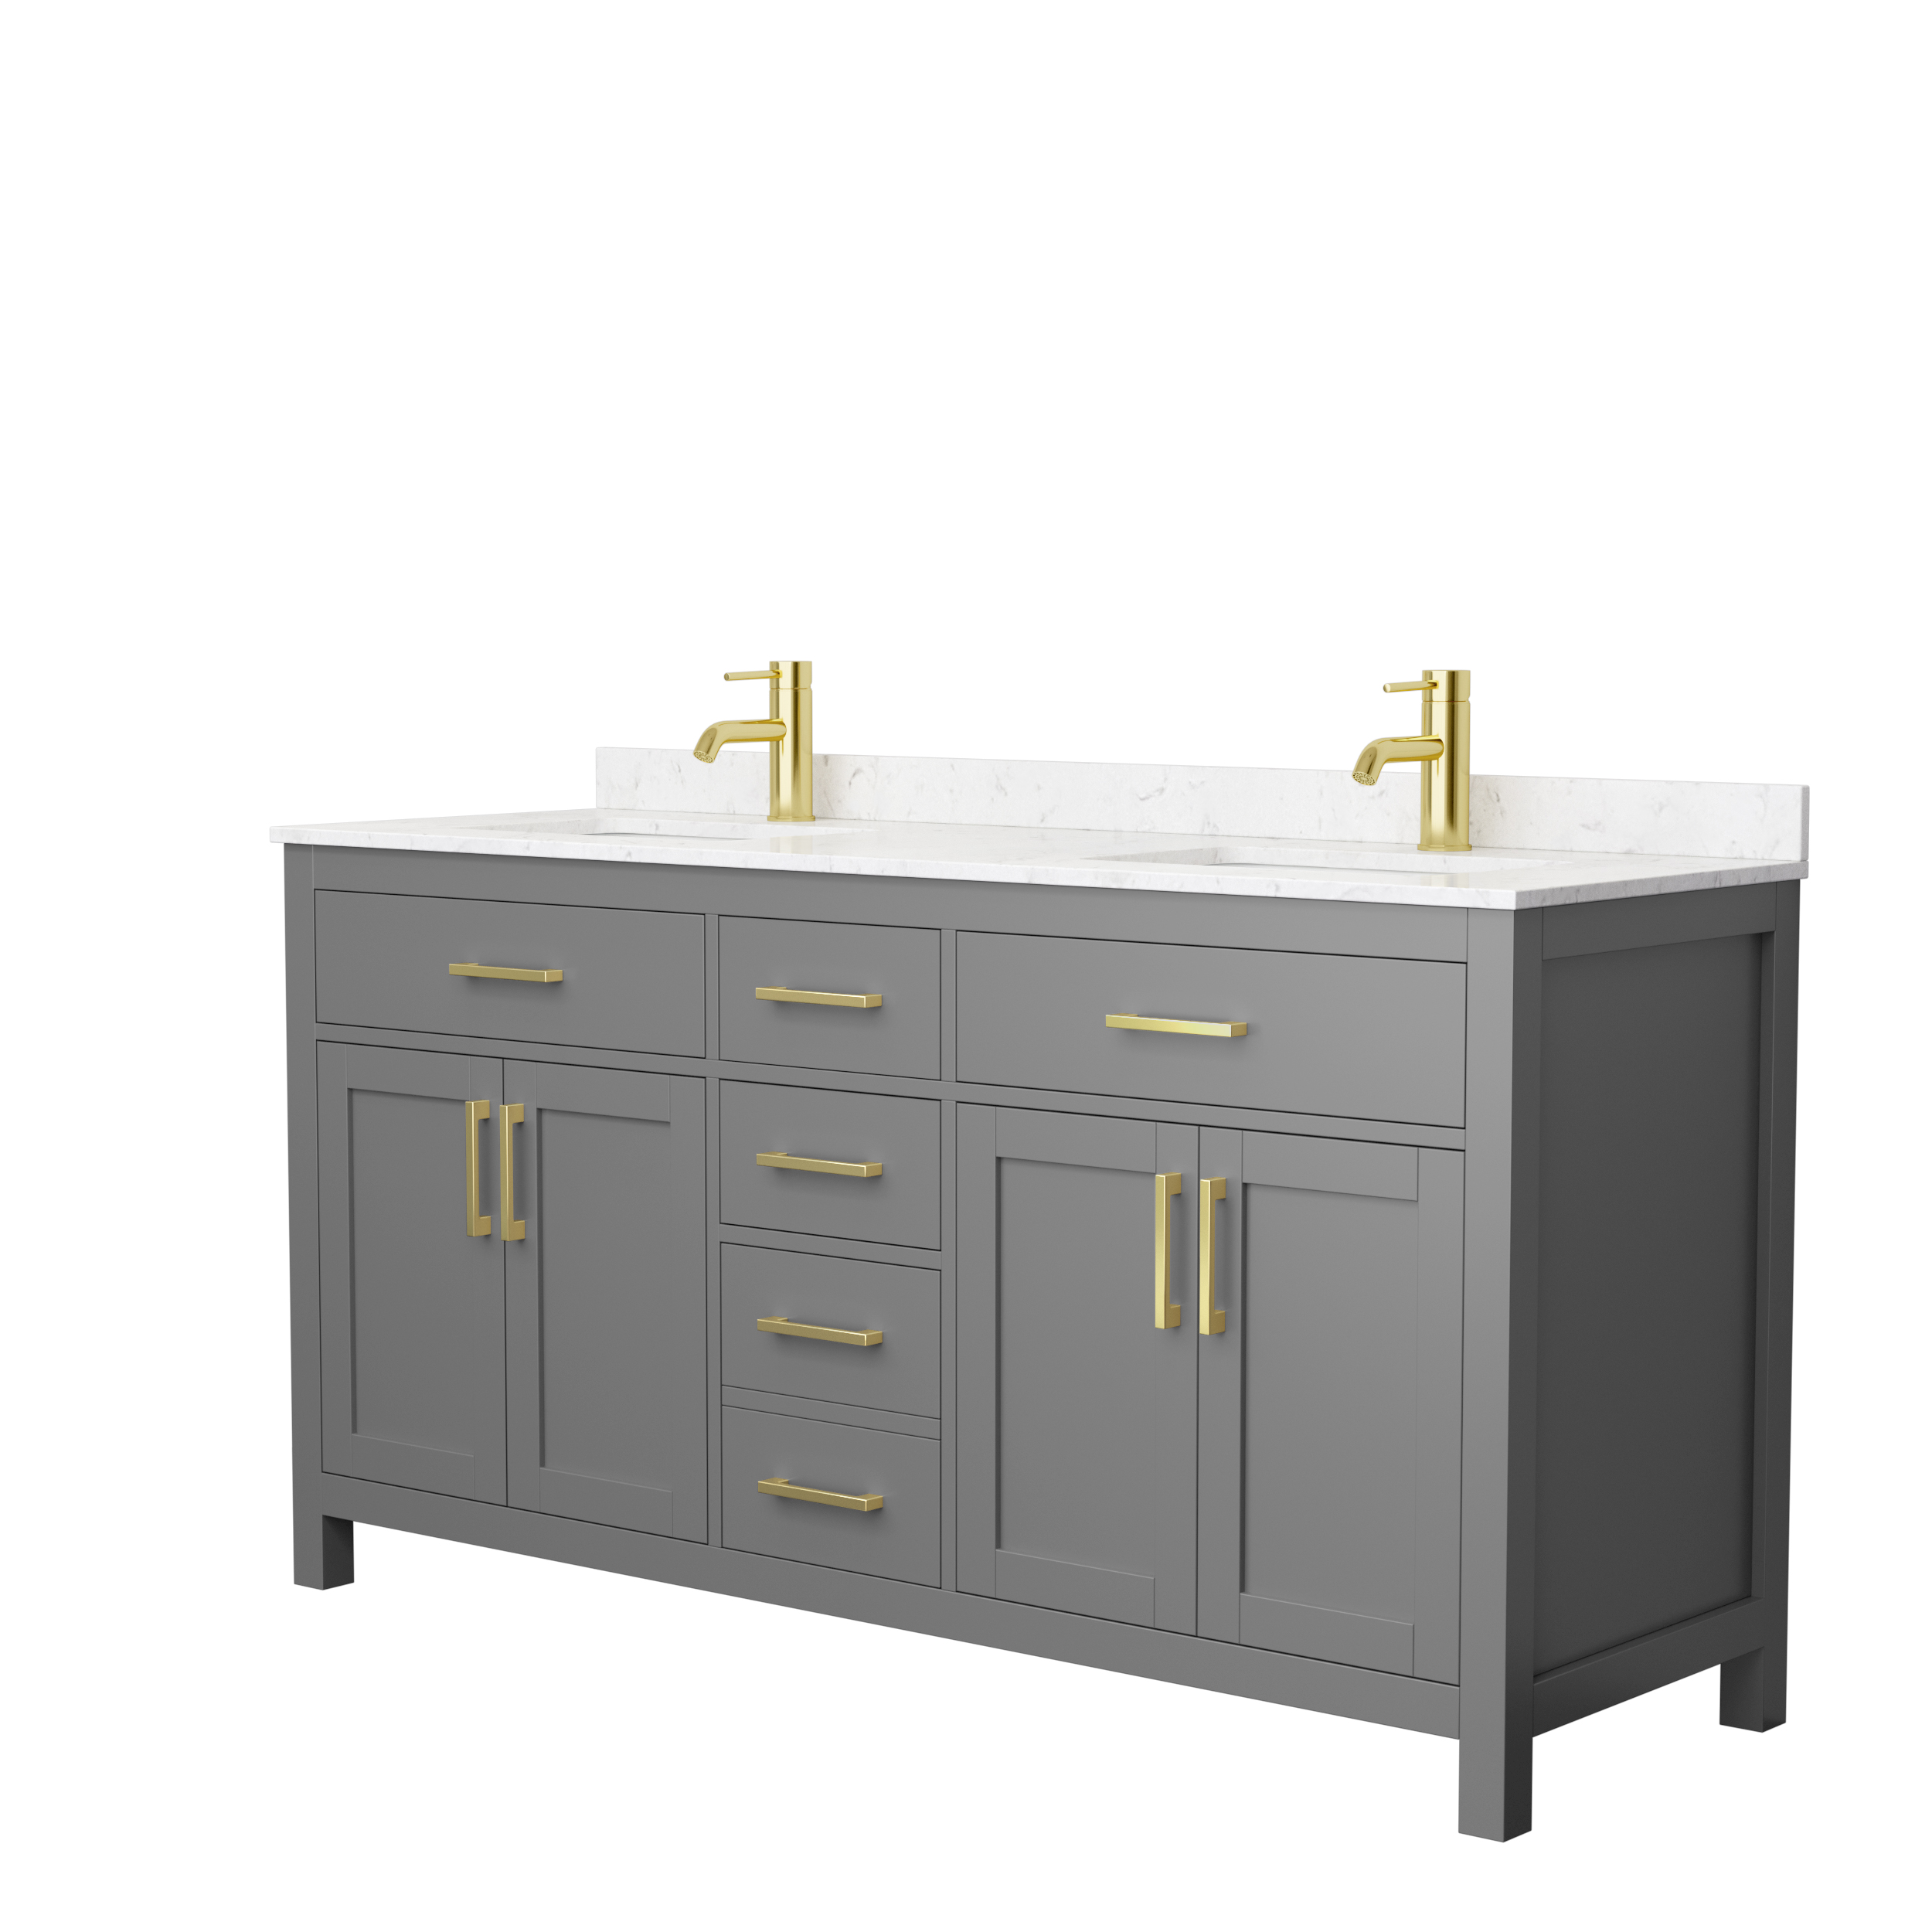 66" Double Bathroom Vanity in Dark Gray, Carrara Cultured Marble Countertop, Undermount Square Sinks, Brushed Gold Trim